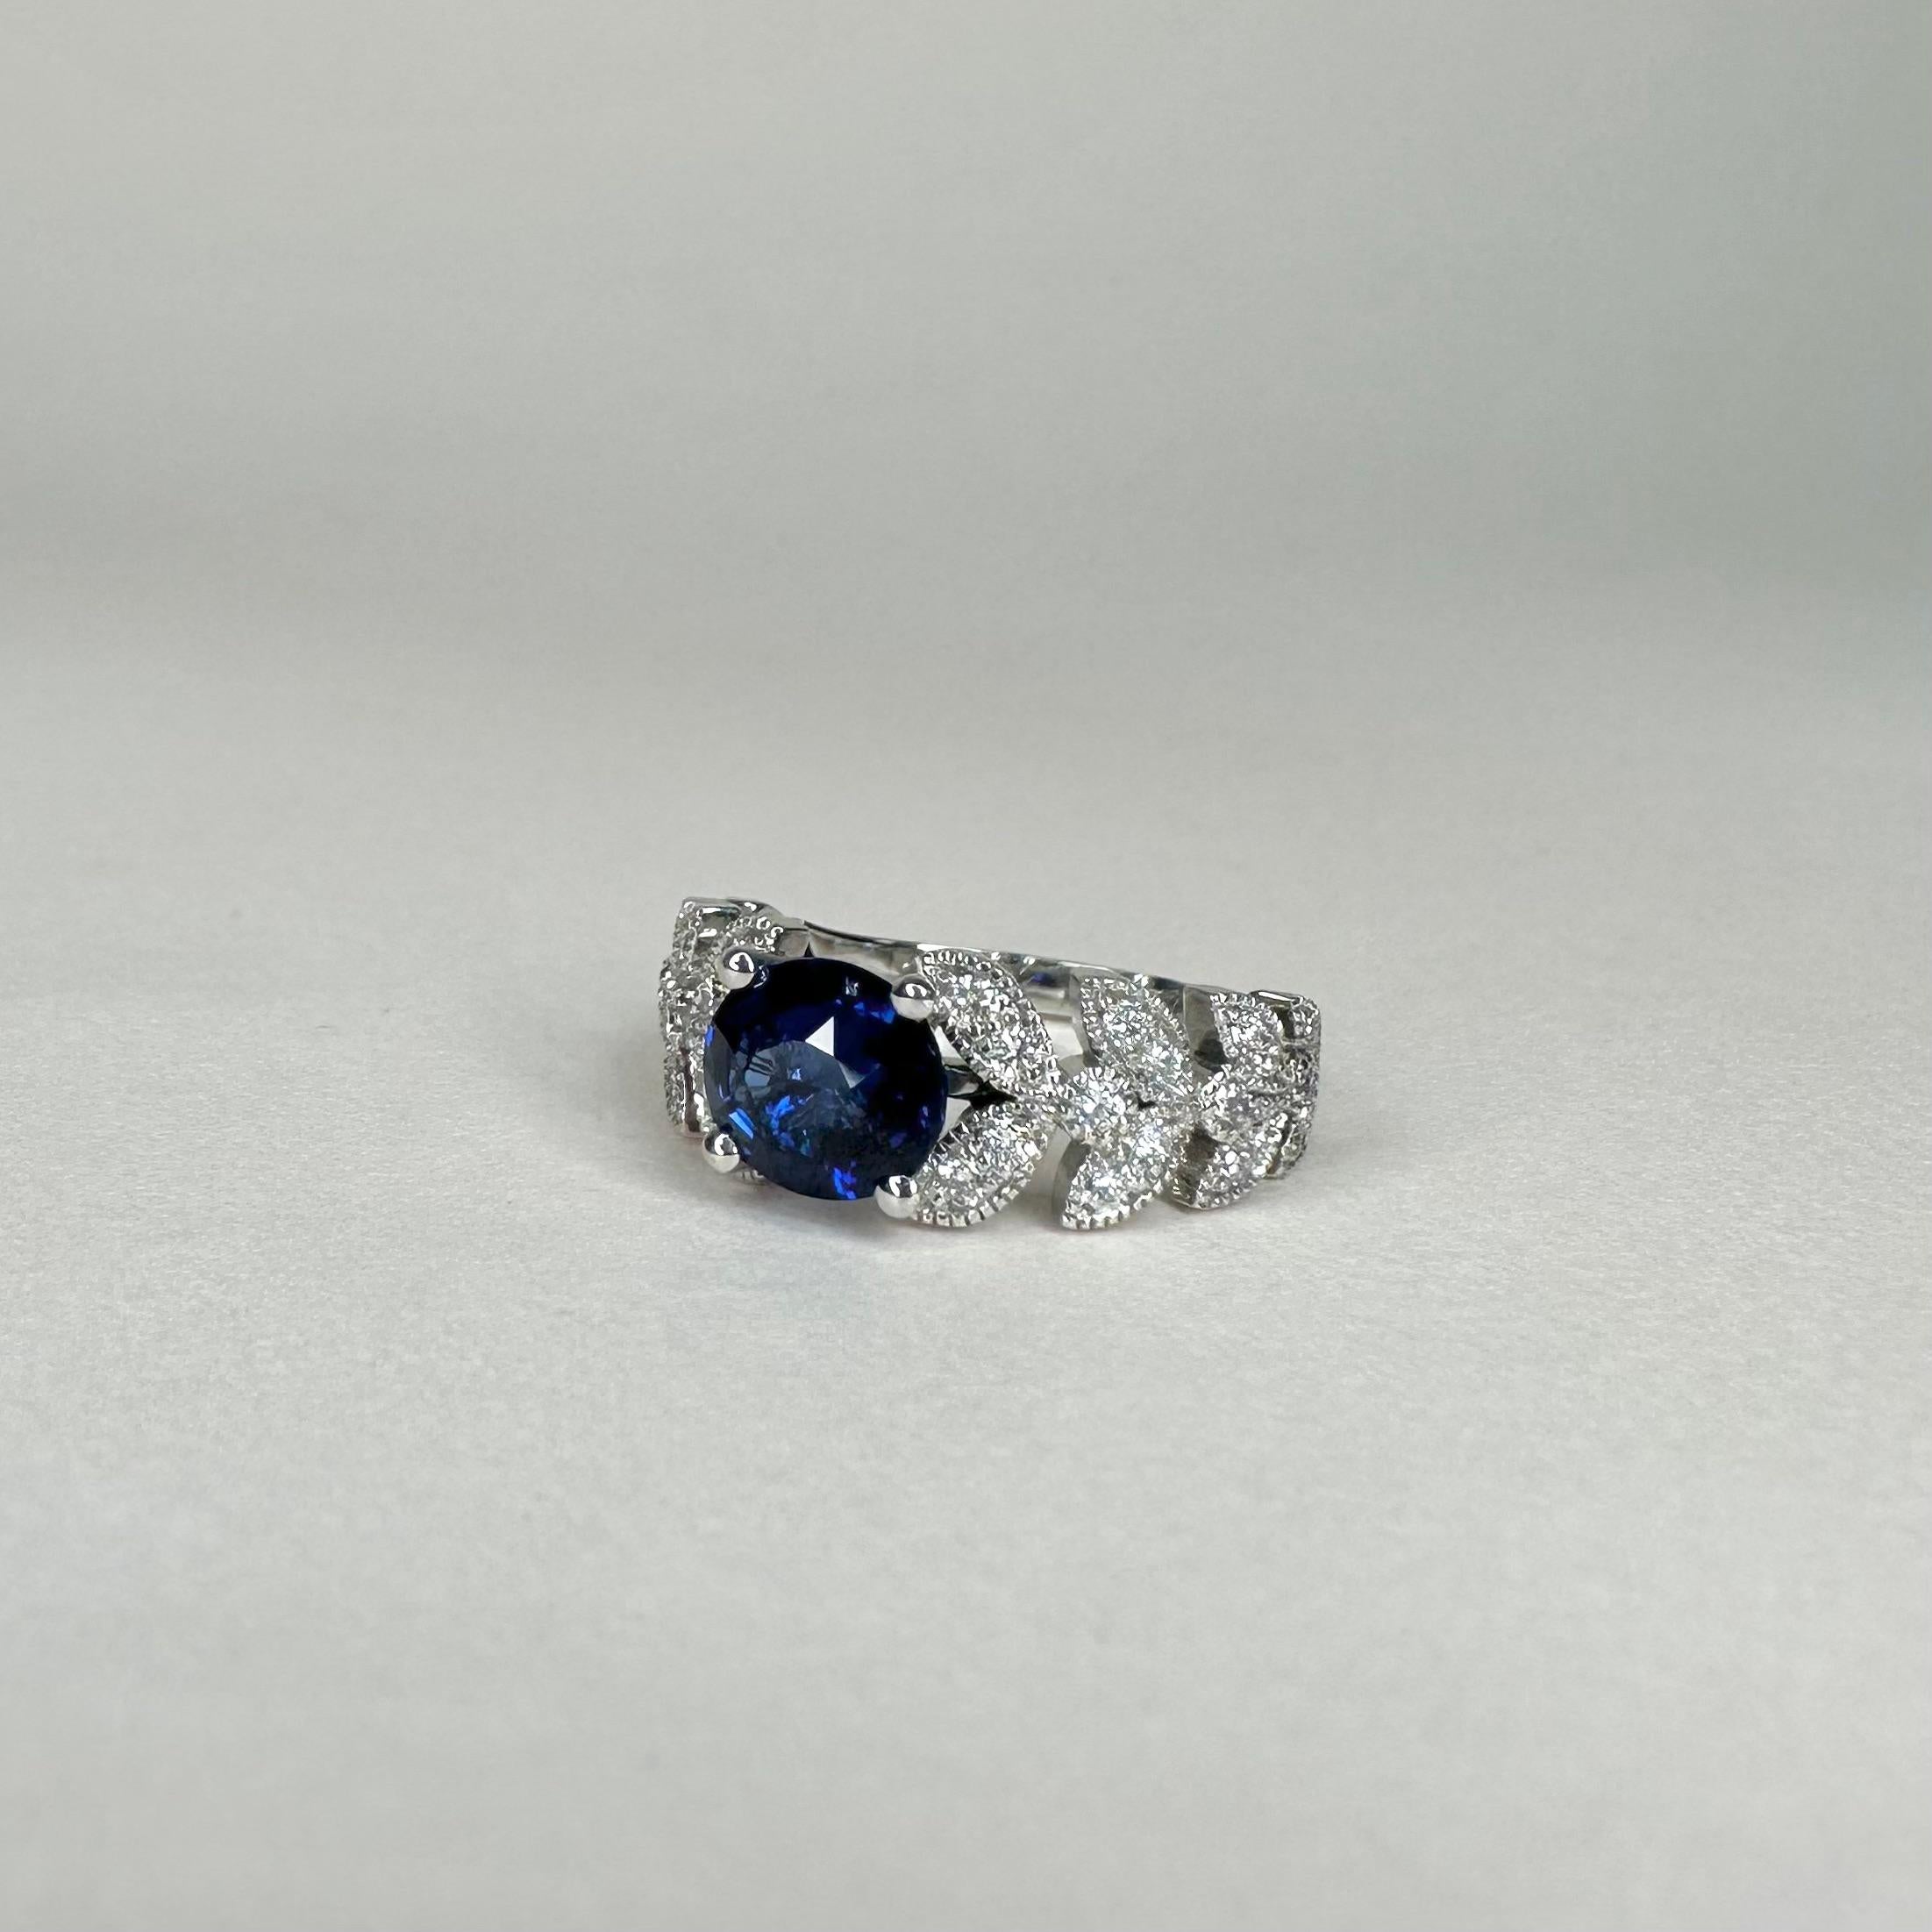 For Sale:  18k White Gold Laurel Leaf Design Ring Set with 1.53 Ct Royal Blue Oval Sapphire 3